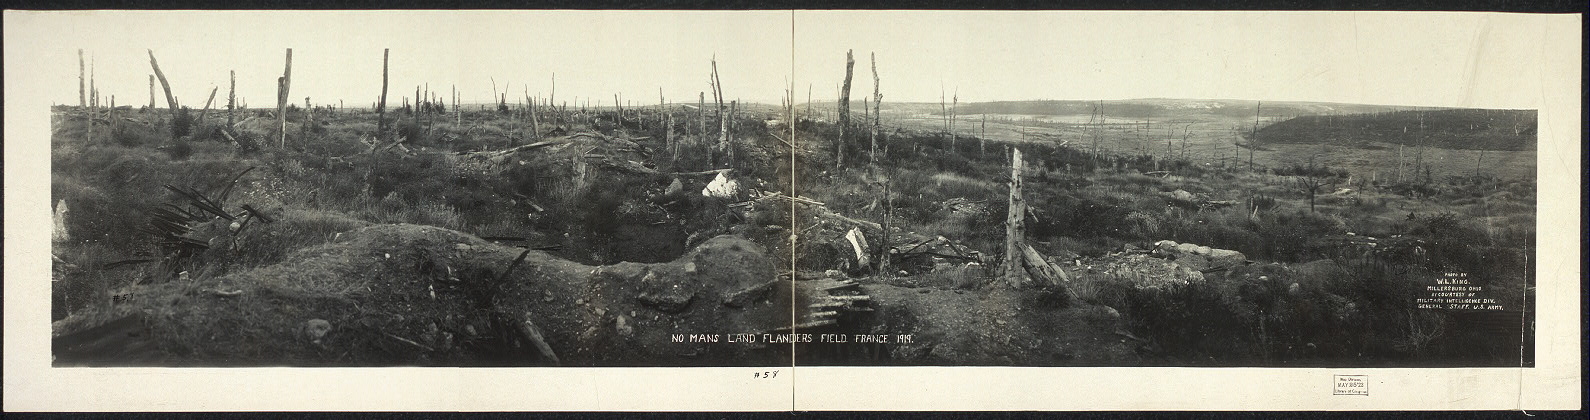 No Man's Land Flanders Field France 1919.